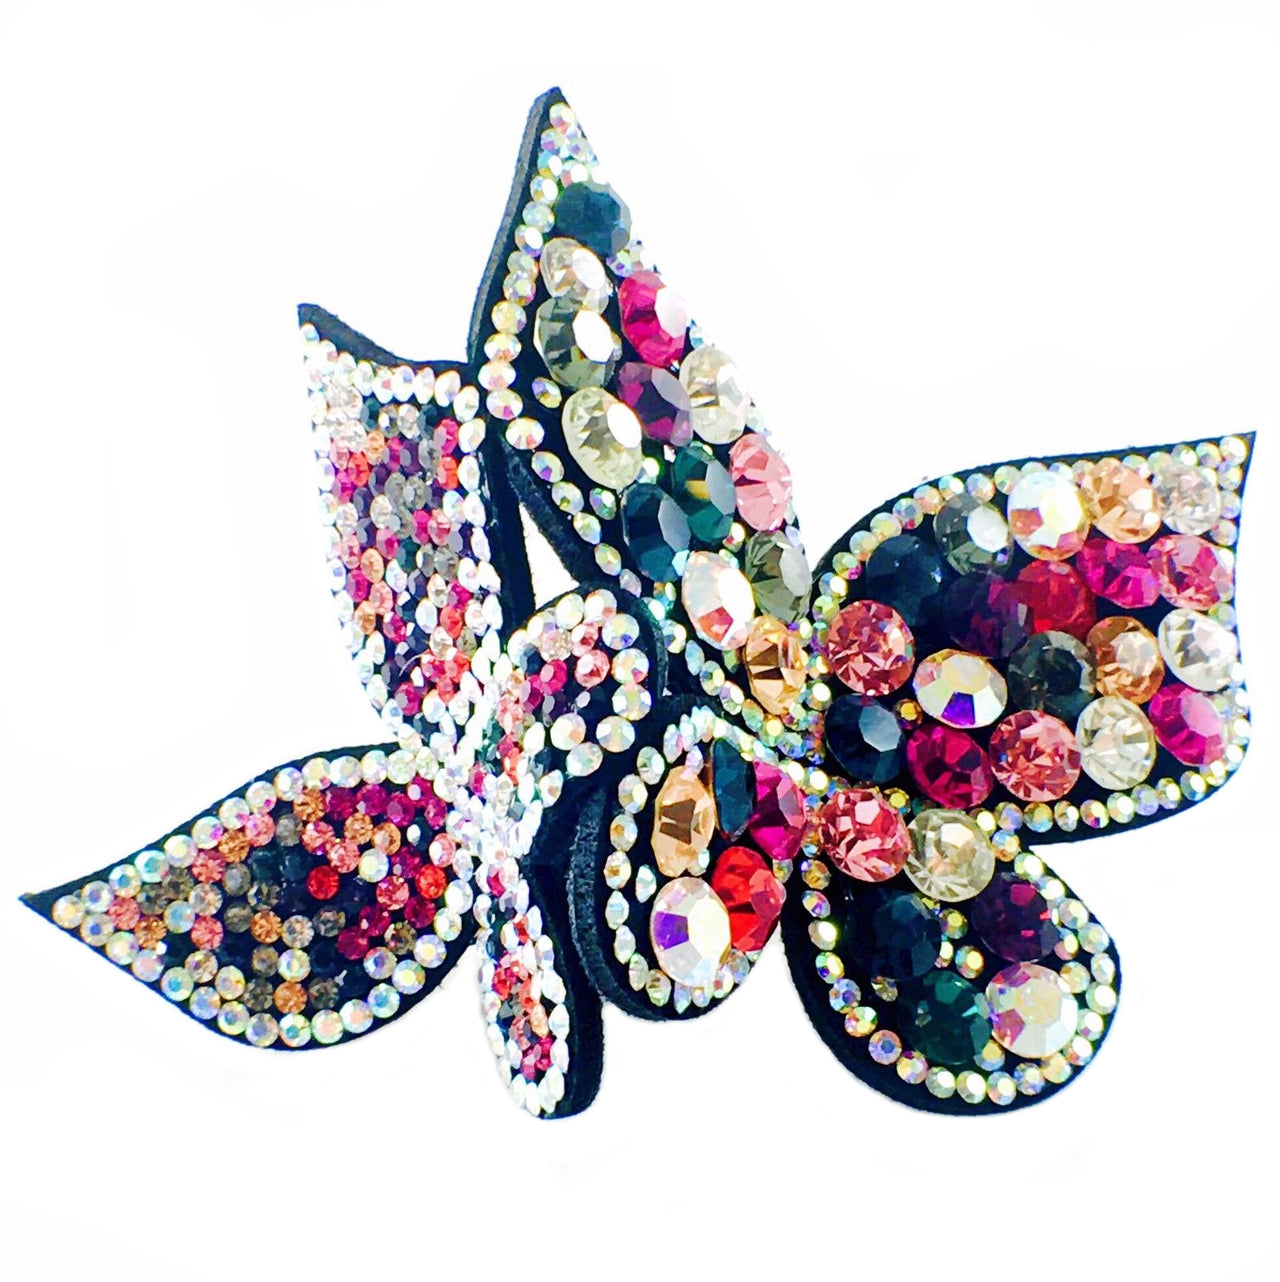 Butterfly Barrette Handmade use Swarovski Crystal Fabric base Silver Multi Color, Barrette - MOGHANT